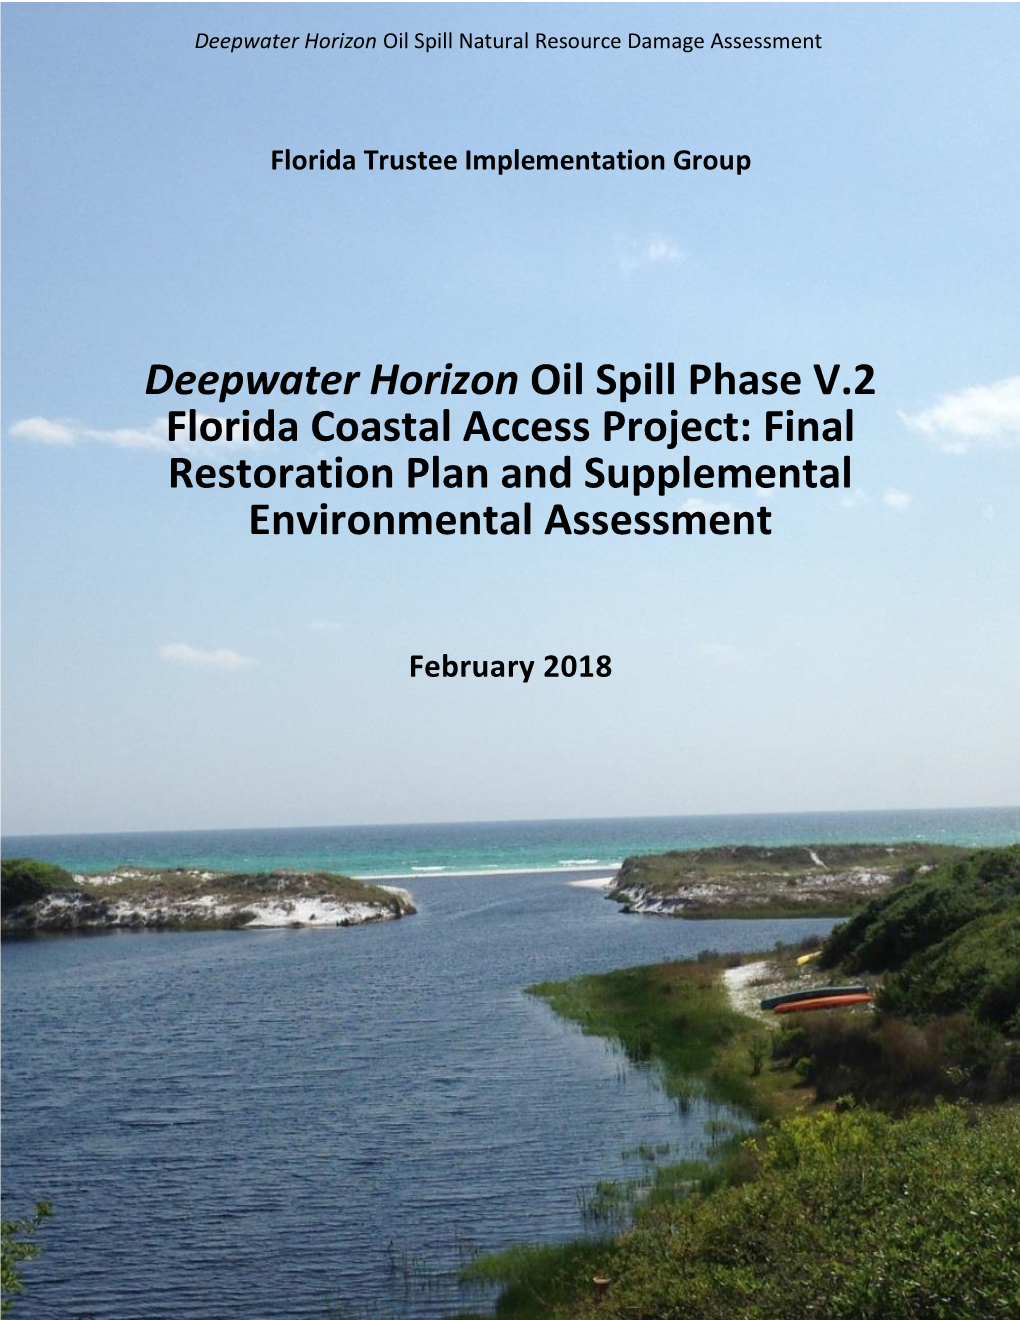 Deepwater Horizon Oil Spill Phase V.2 Florida Coastal Access Project: Final Restoration Plan and Supplemental Environmental Assessment